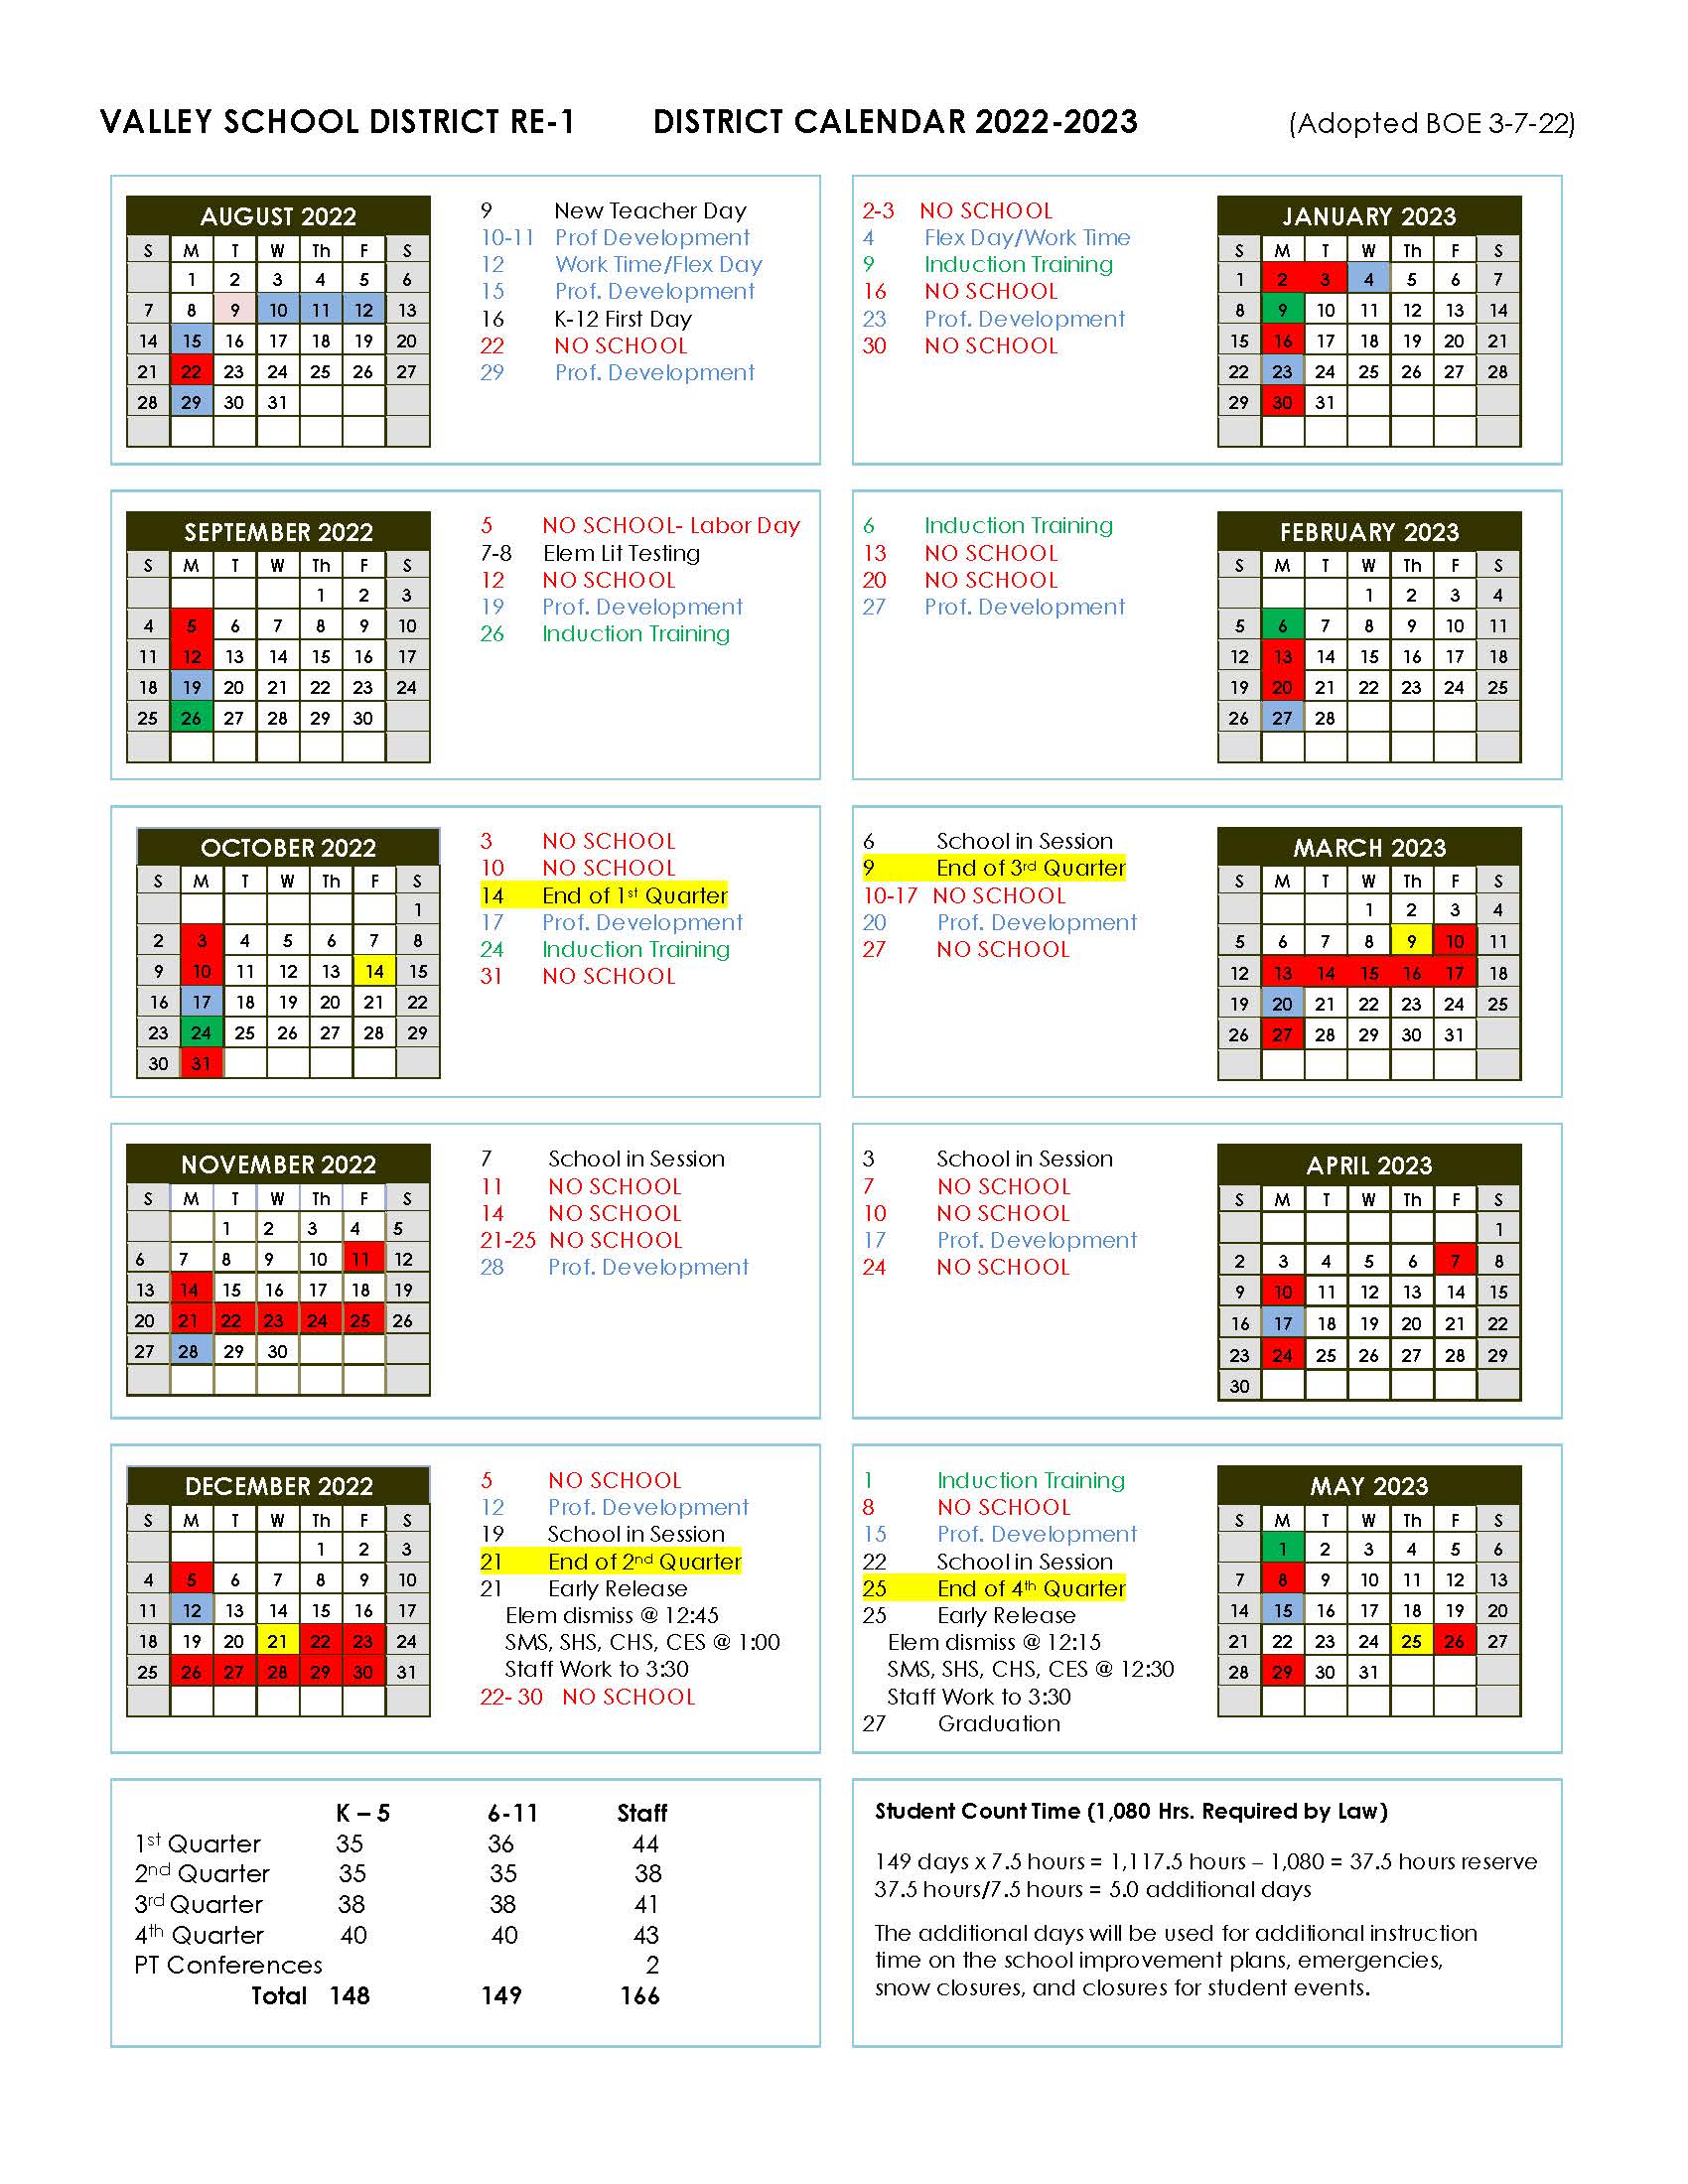 Valley School District RE1 Calendar 20232024